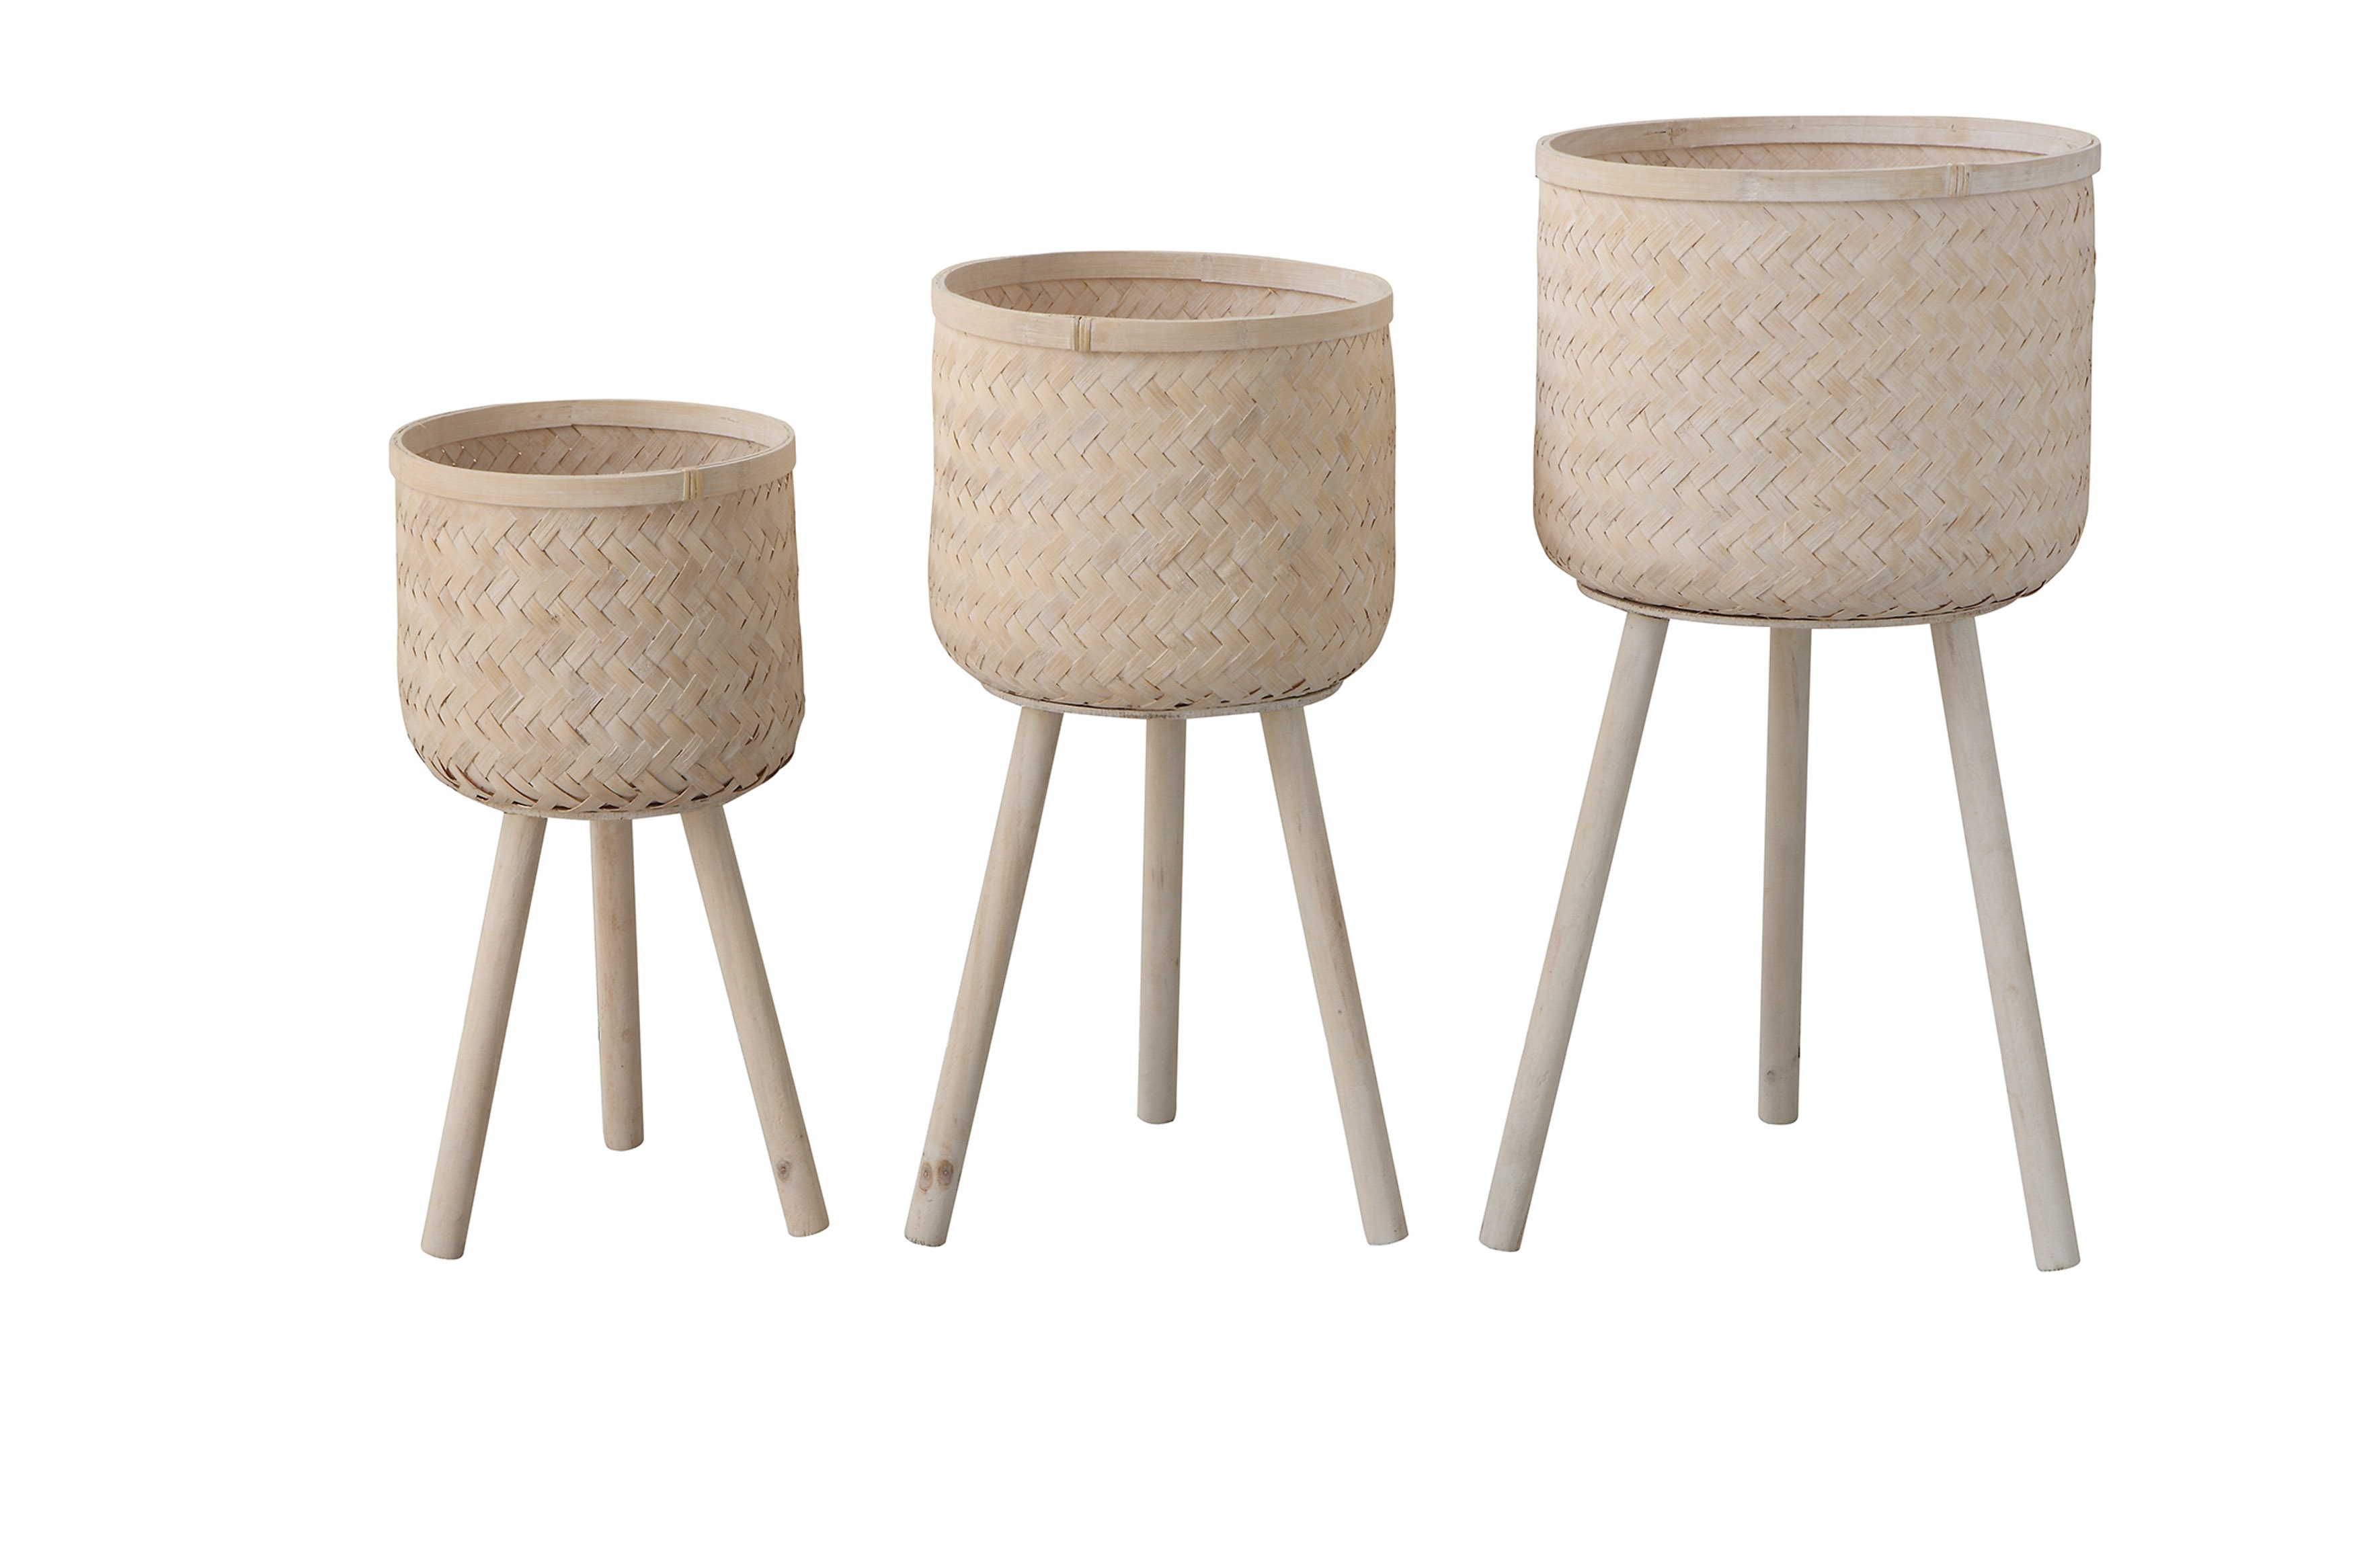 Bamboo Floor Baskets with Wood Legs, Whitewashed, Set of 3 - Image 0